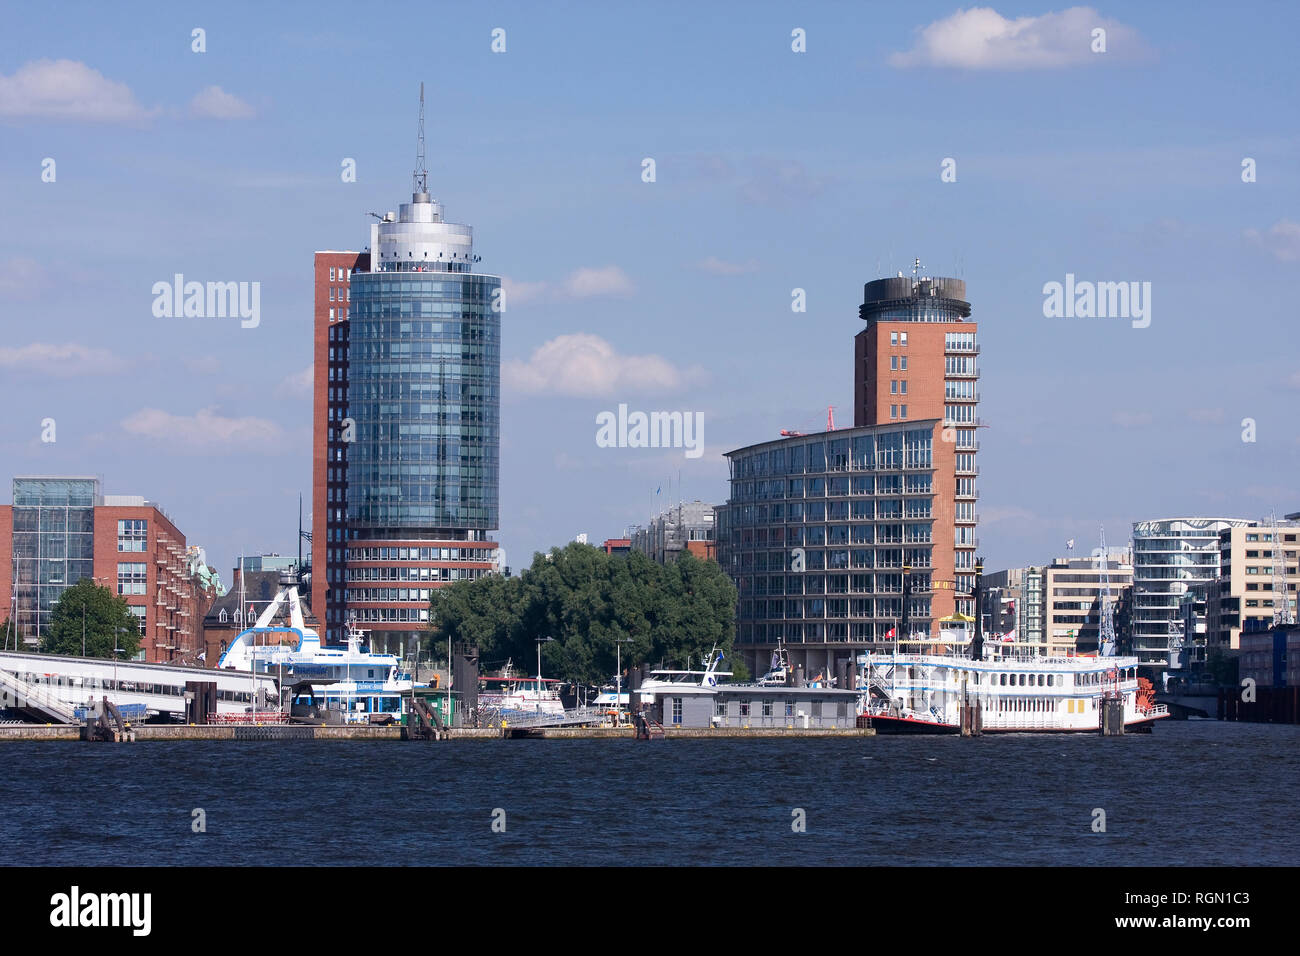 Hafencity mit Columbus Haus, Hansestadt Hamburg, Deutschland, Europa Stock Photo